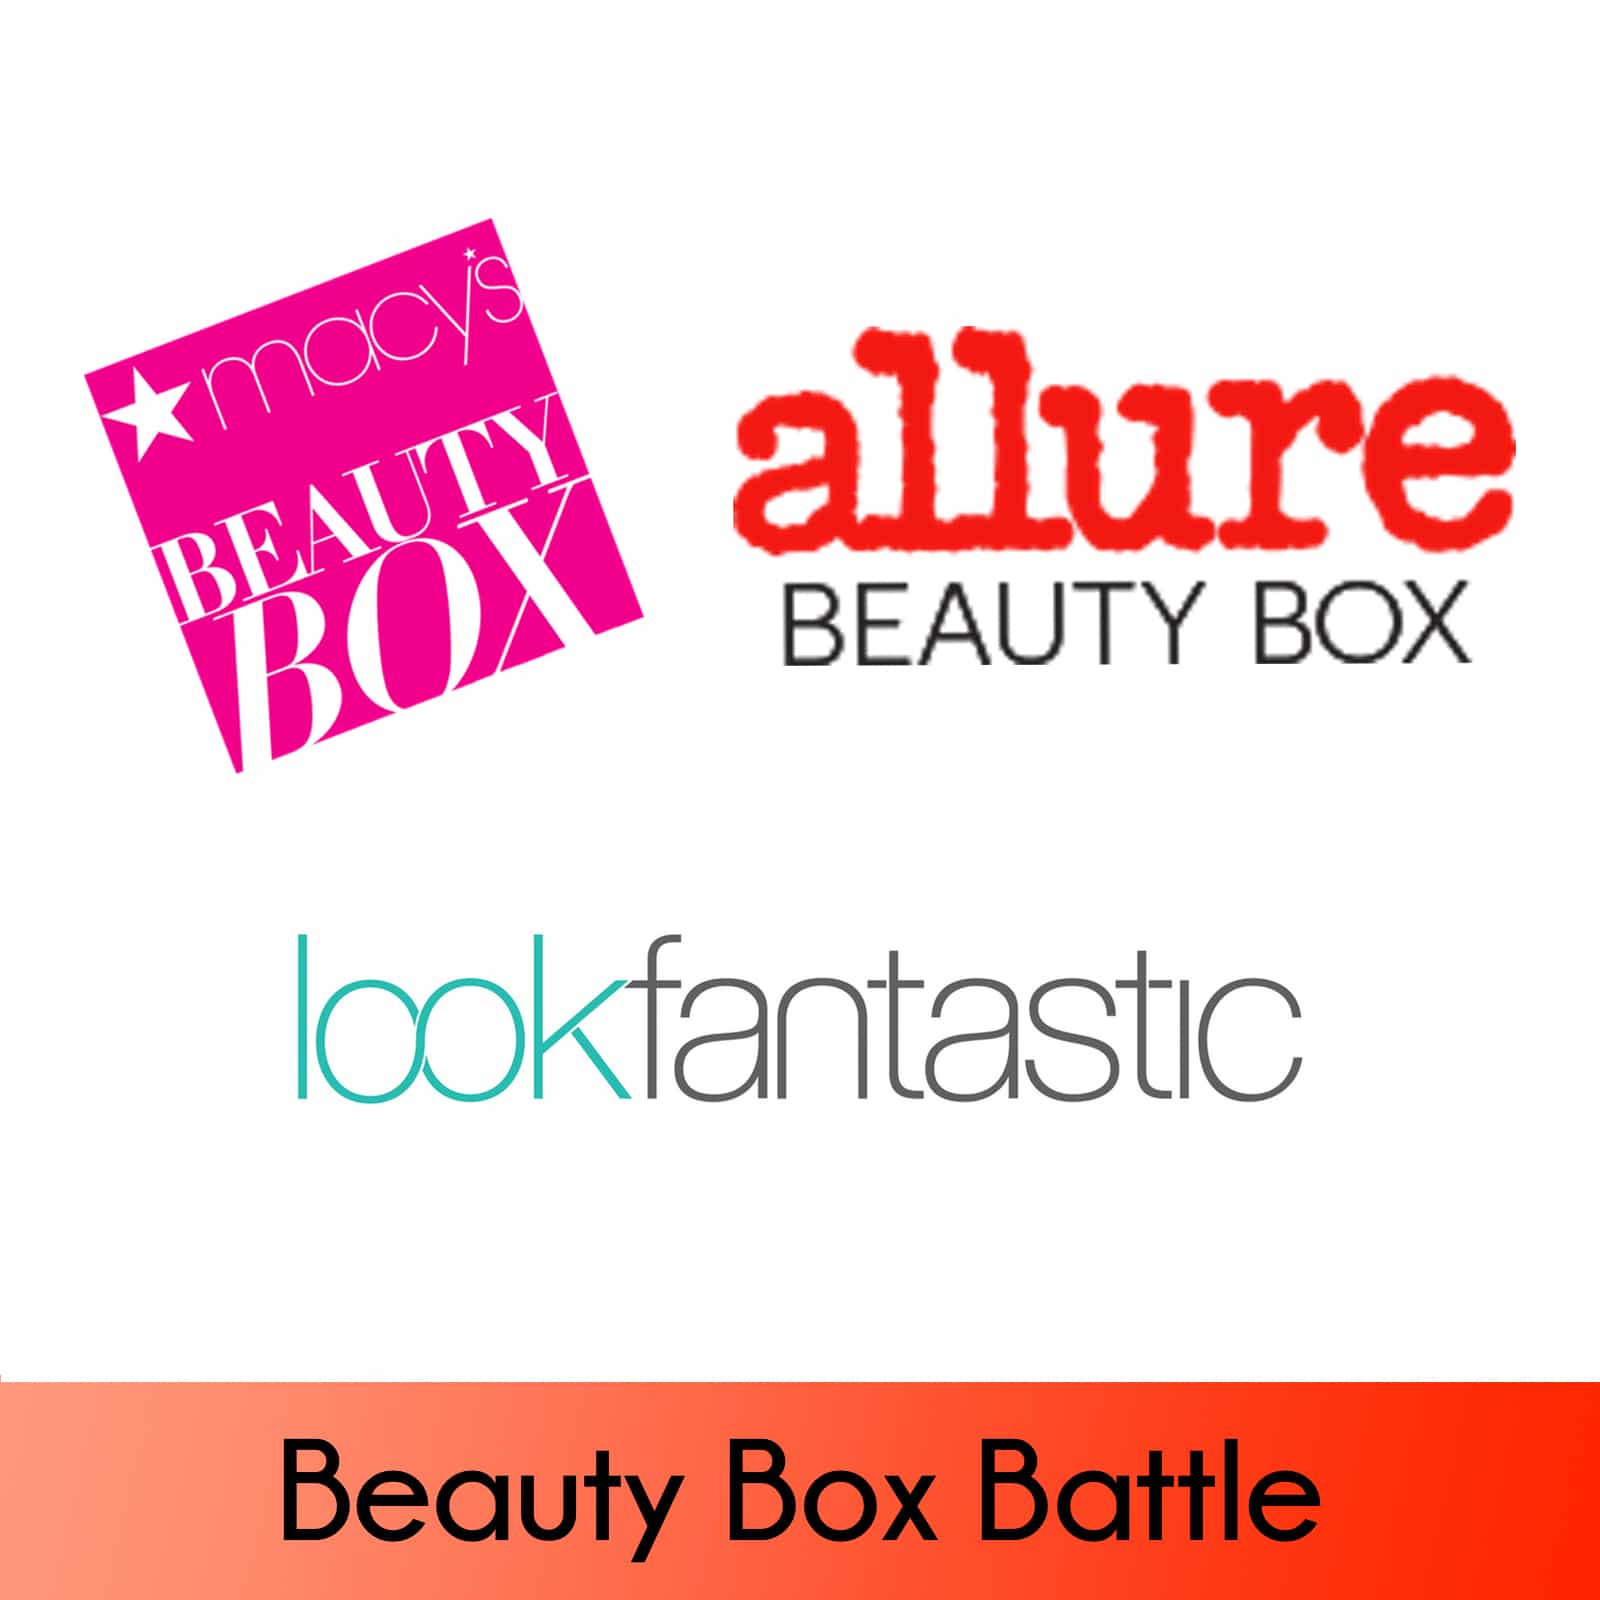 Macy's Beauty Box vs Allure Beauty Box vs Lookfantastic August 2017